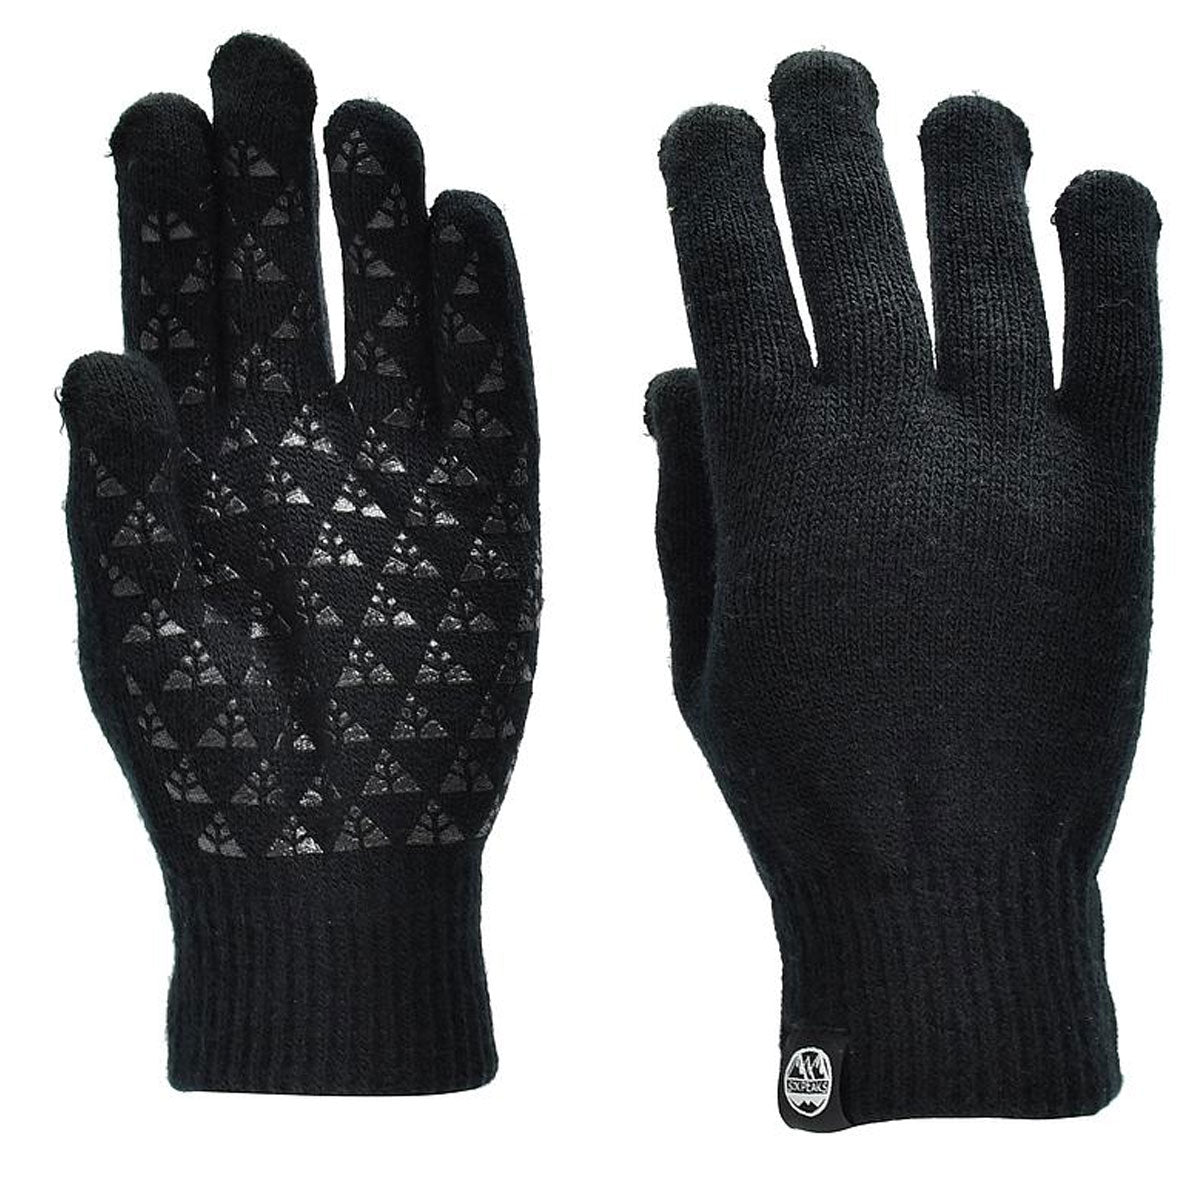 Six Peaks Winter Knitted Gloves - Adult - Black